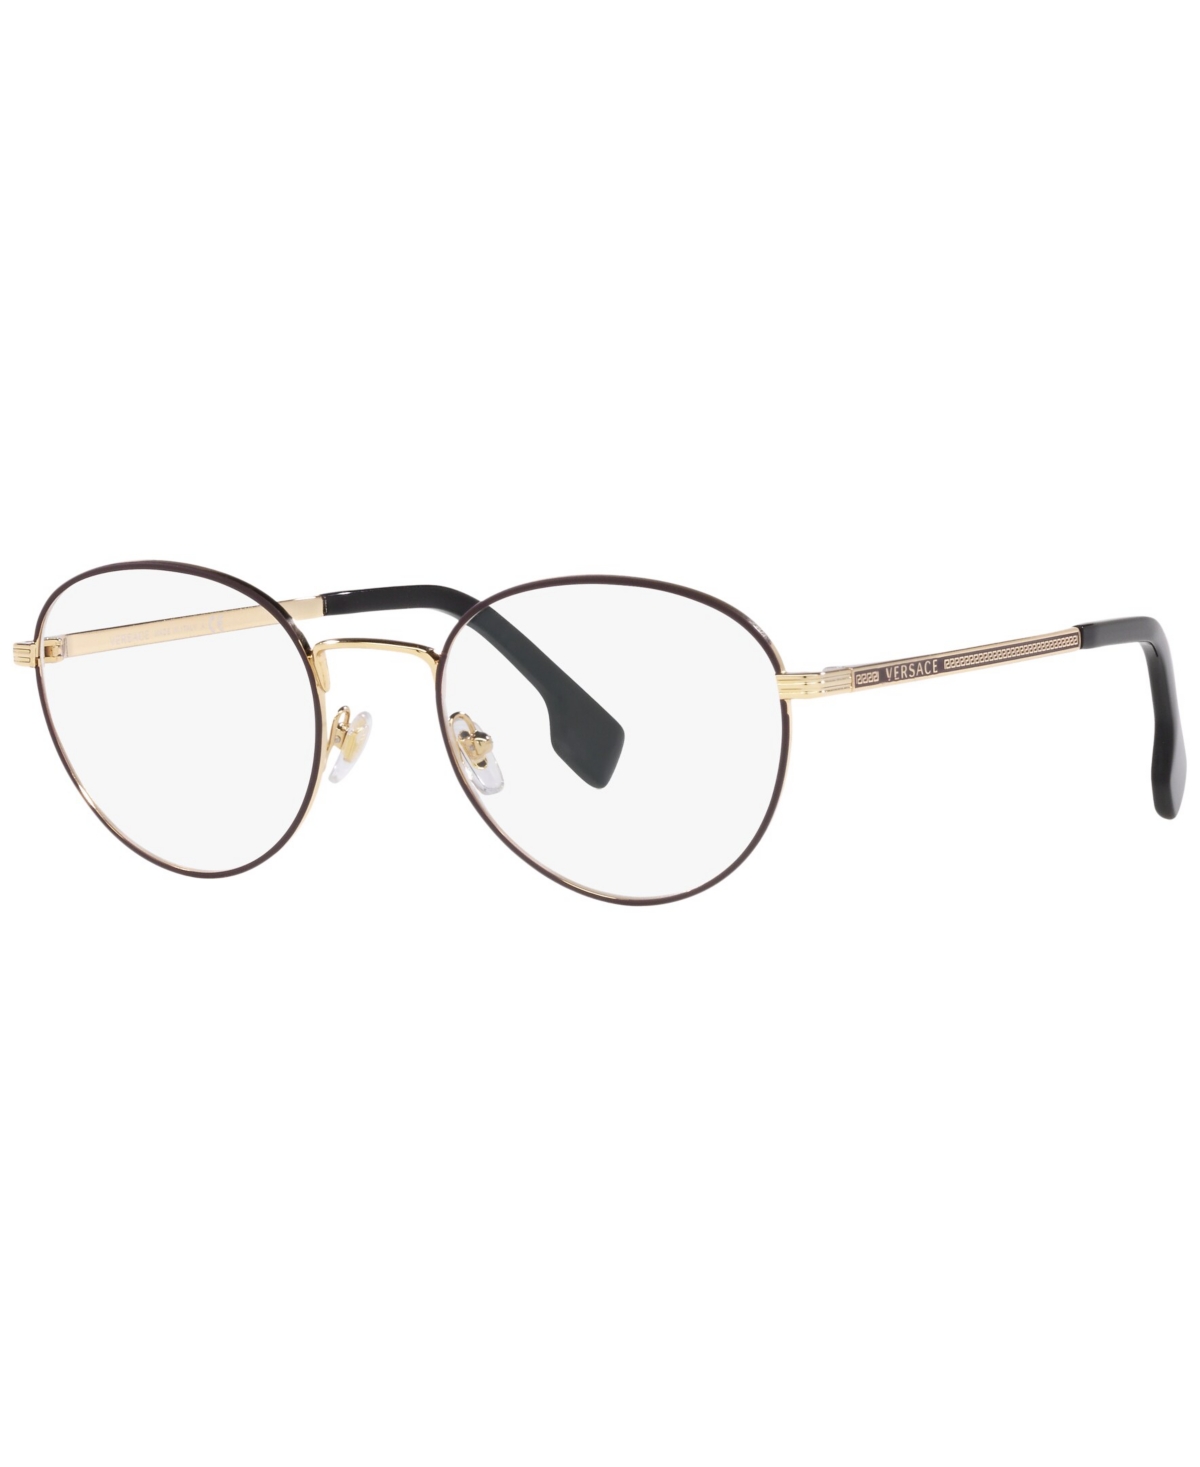 VE1279 Men's Phantos Eyeglasses - Bordeaux, Gold Tone